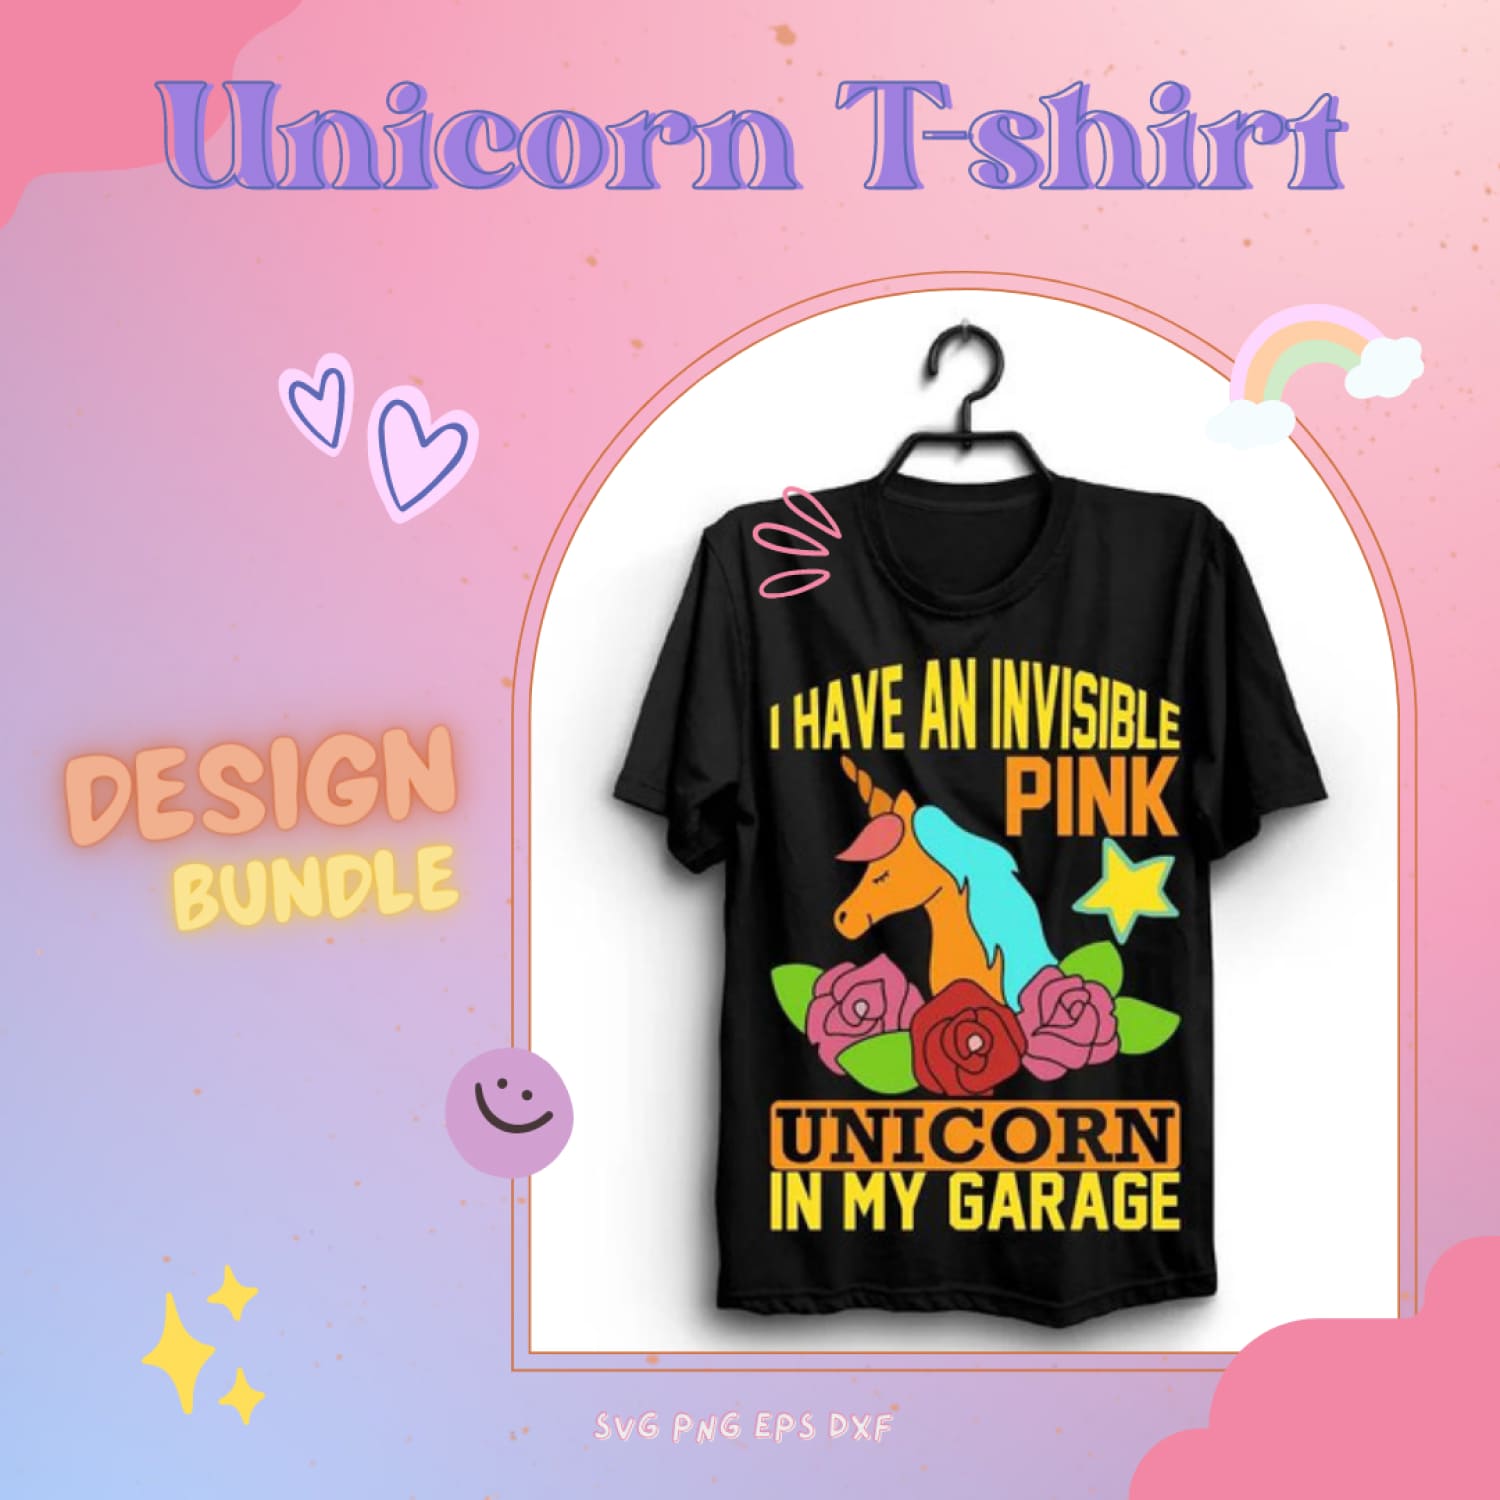 Unicorn T-Shirt Design Bundle.